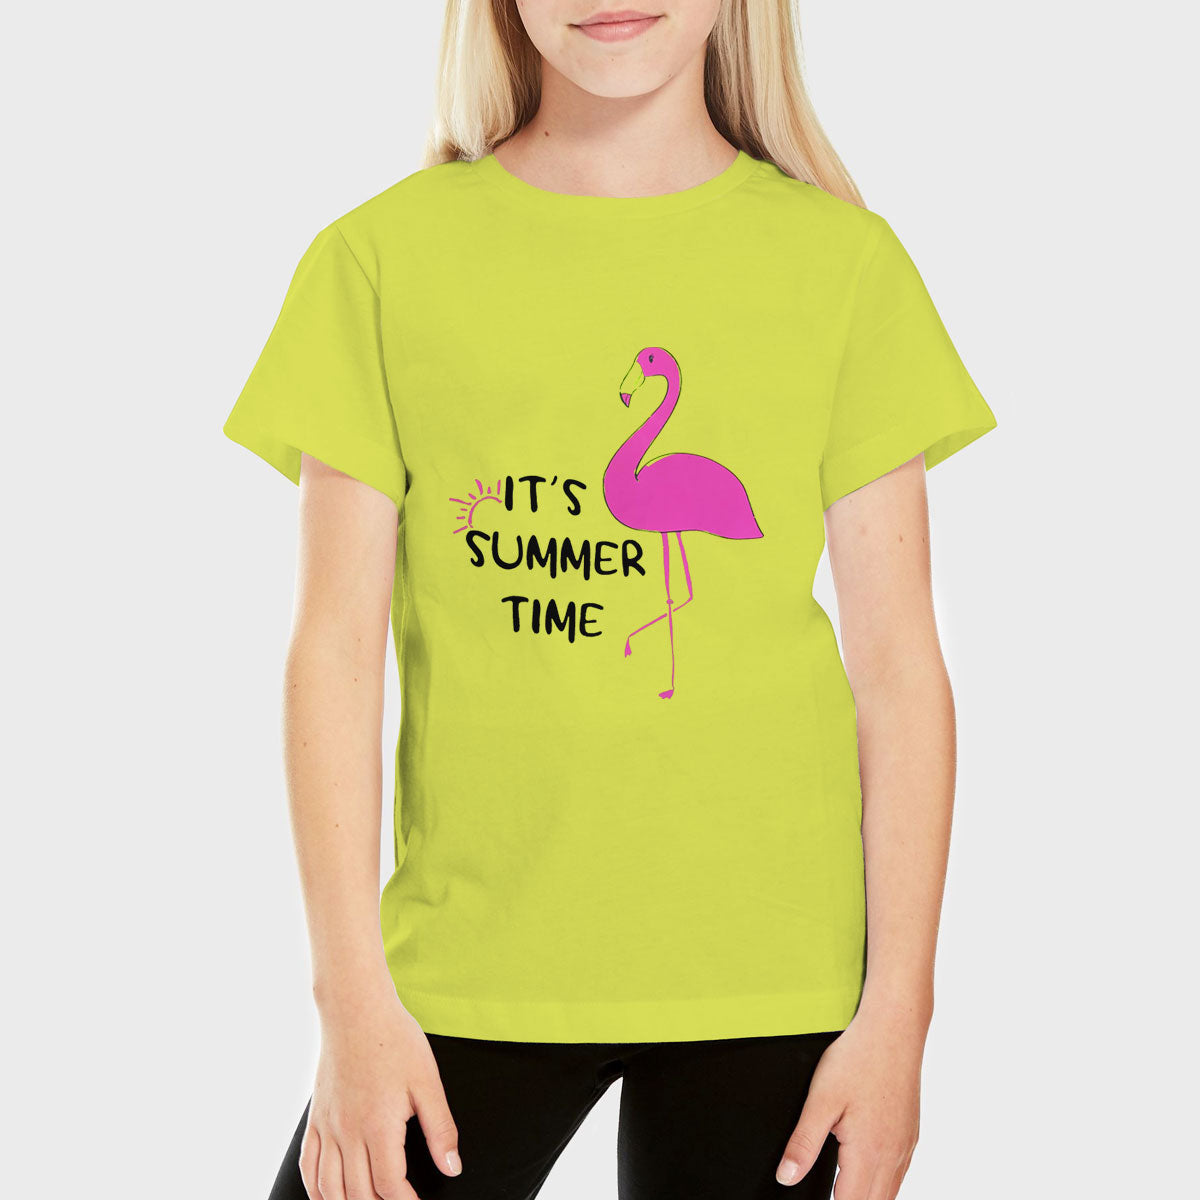 Cute Girl Printed Summer Tee Shirt